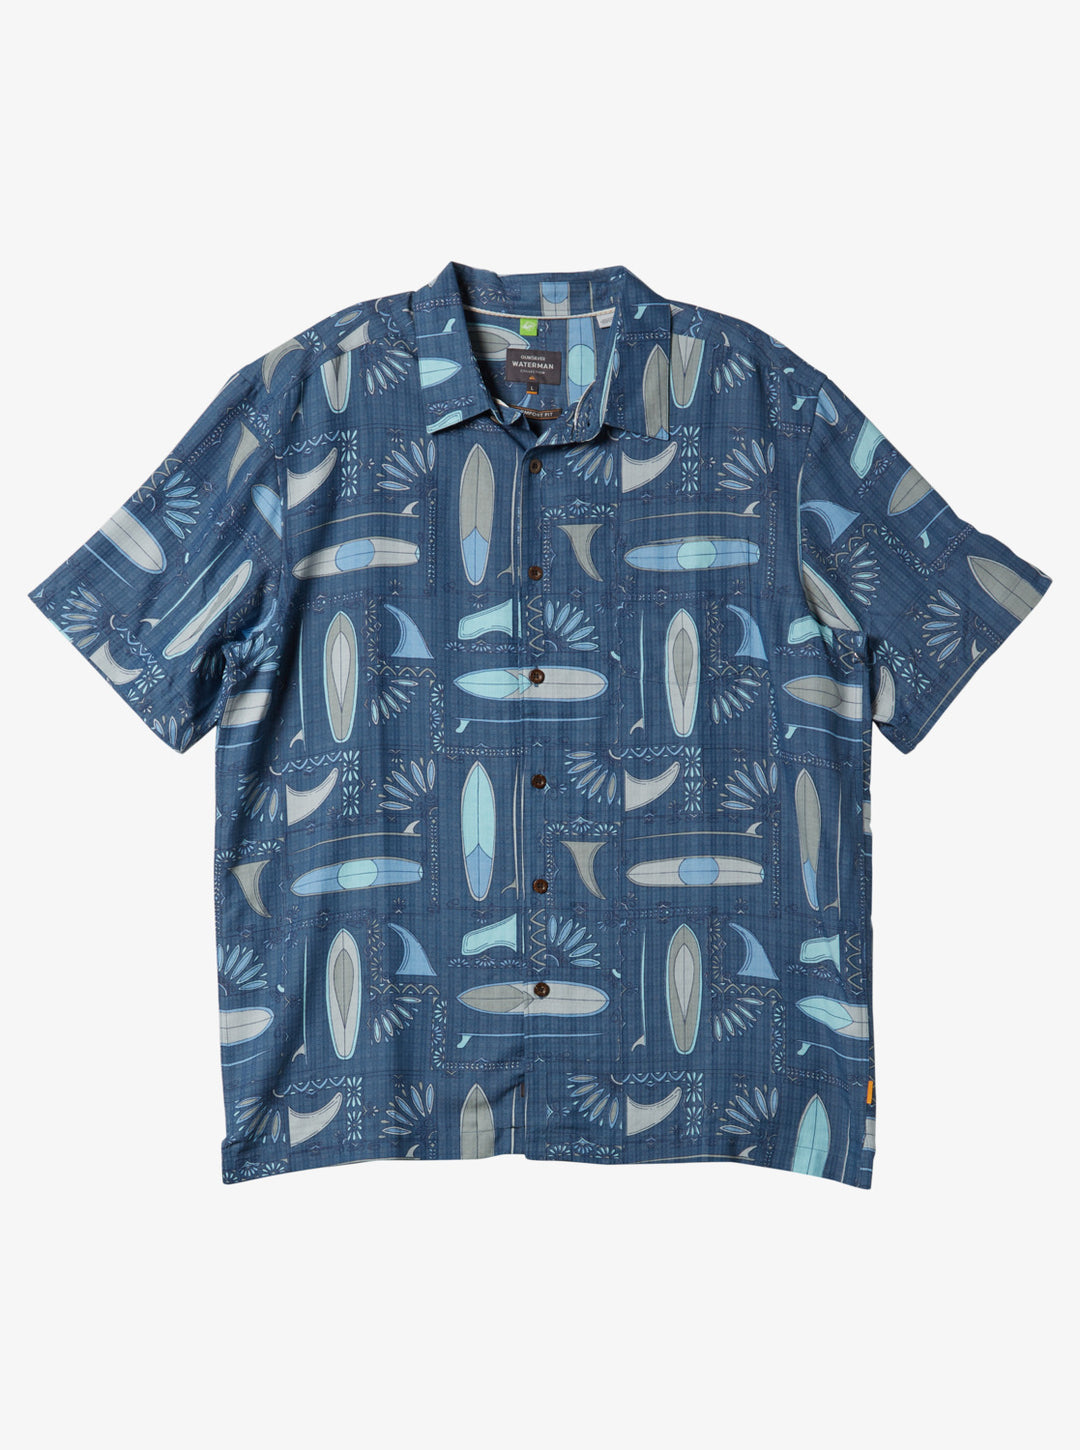 Quiksilver Waterman Long Boards Woven Shirt - Ensign Blue - Sun Diego Boardshop